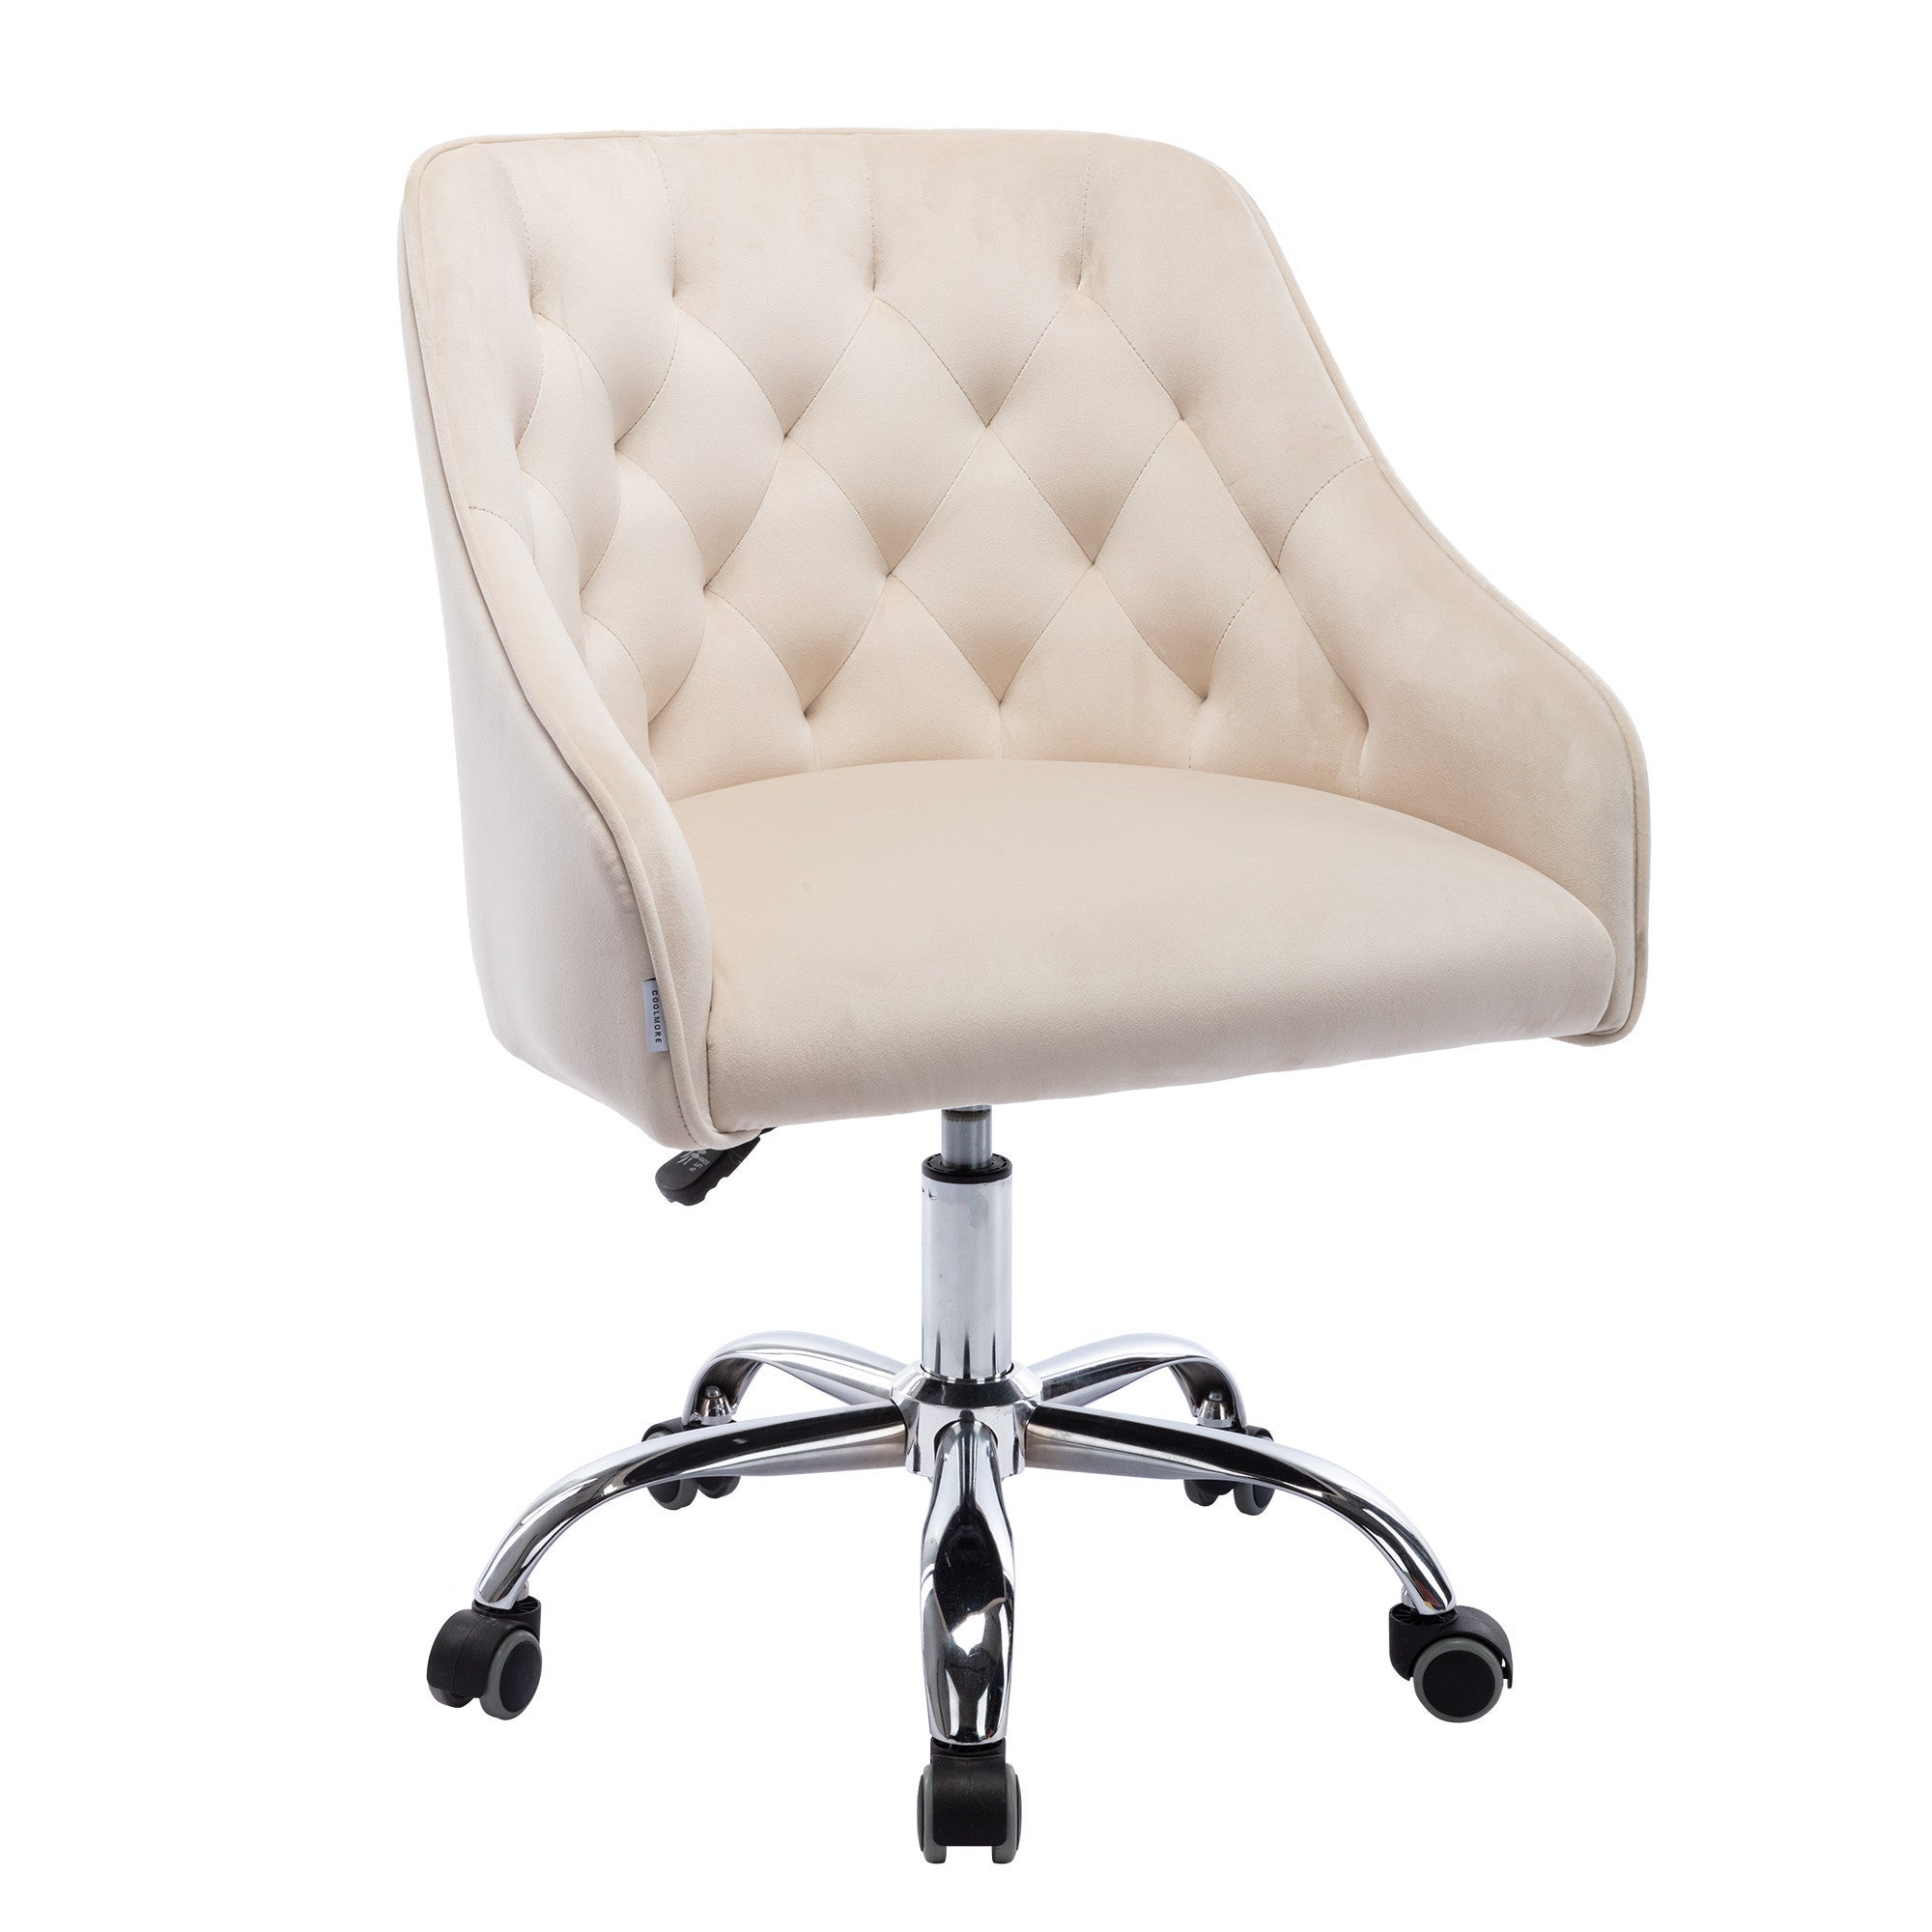 Swivel Shell Chair for Living Room/ Modern Leisure Office Chair - Beige